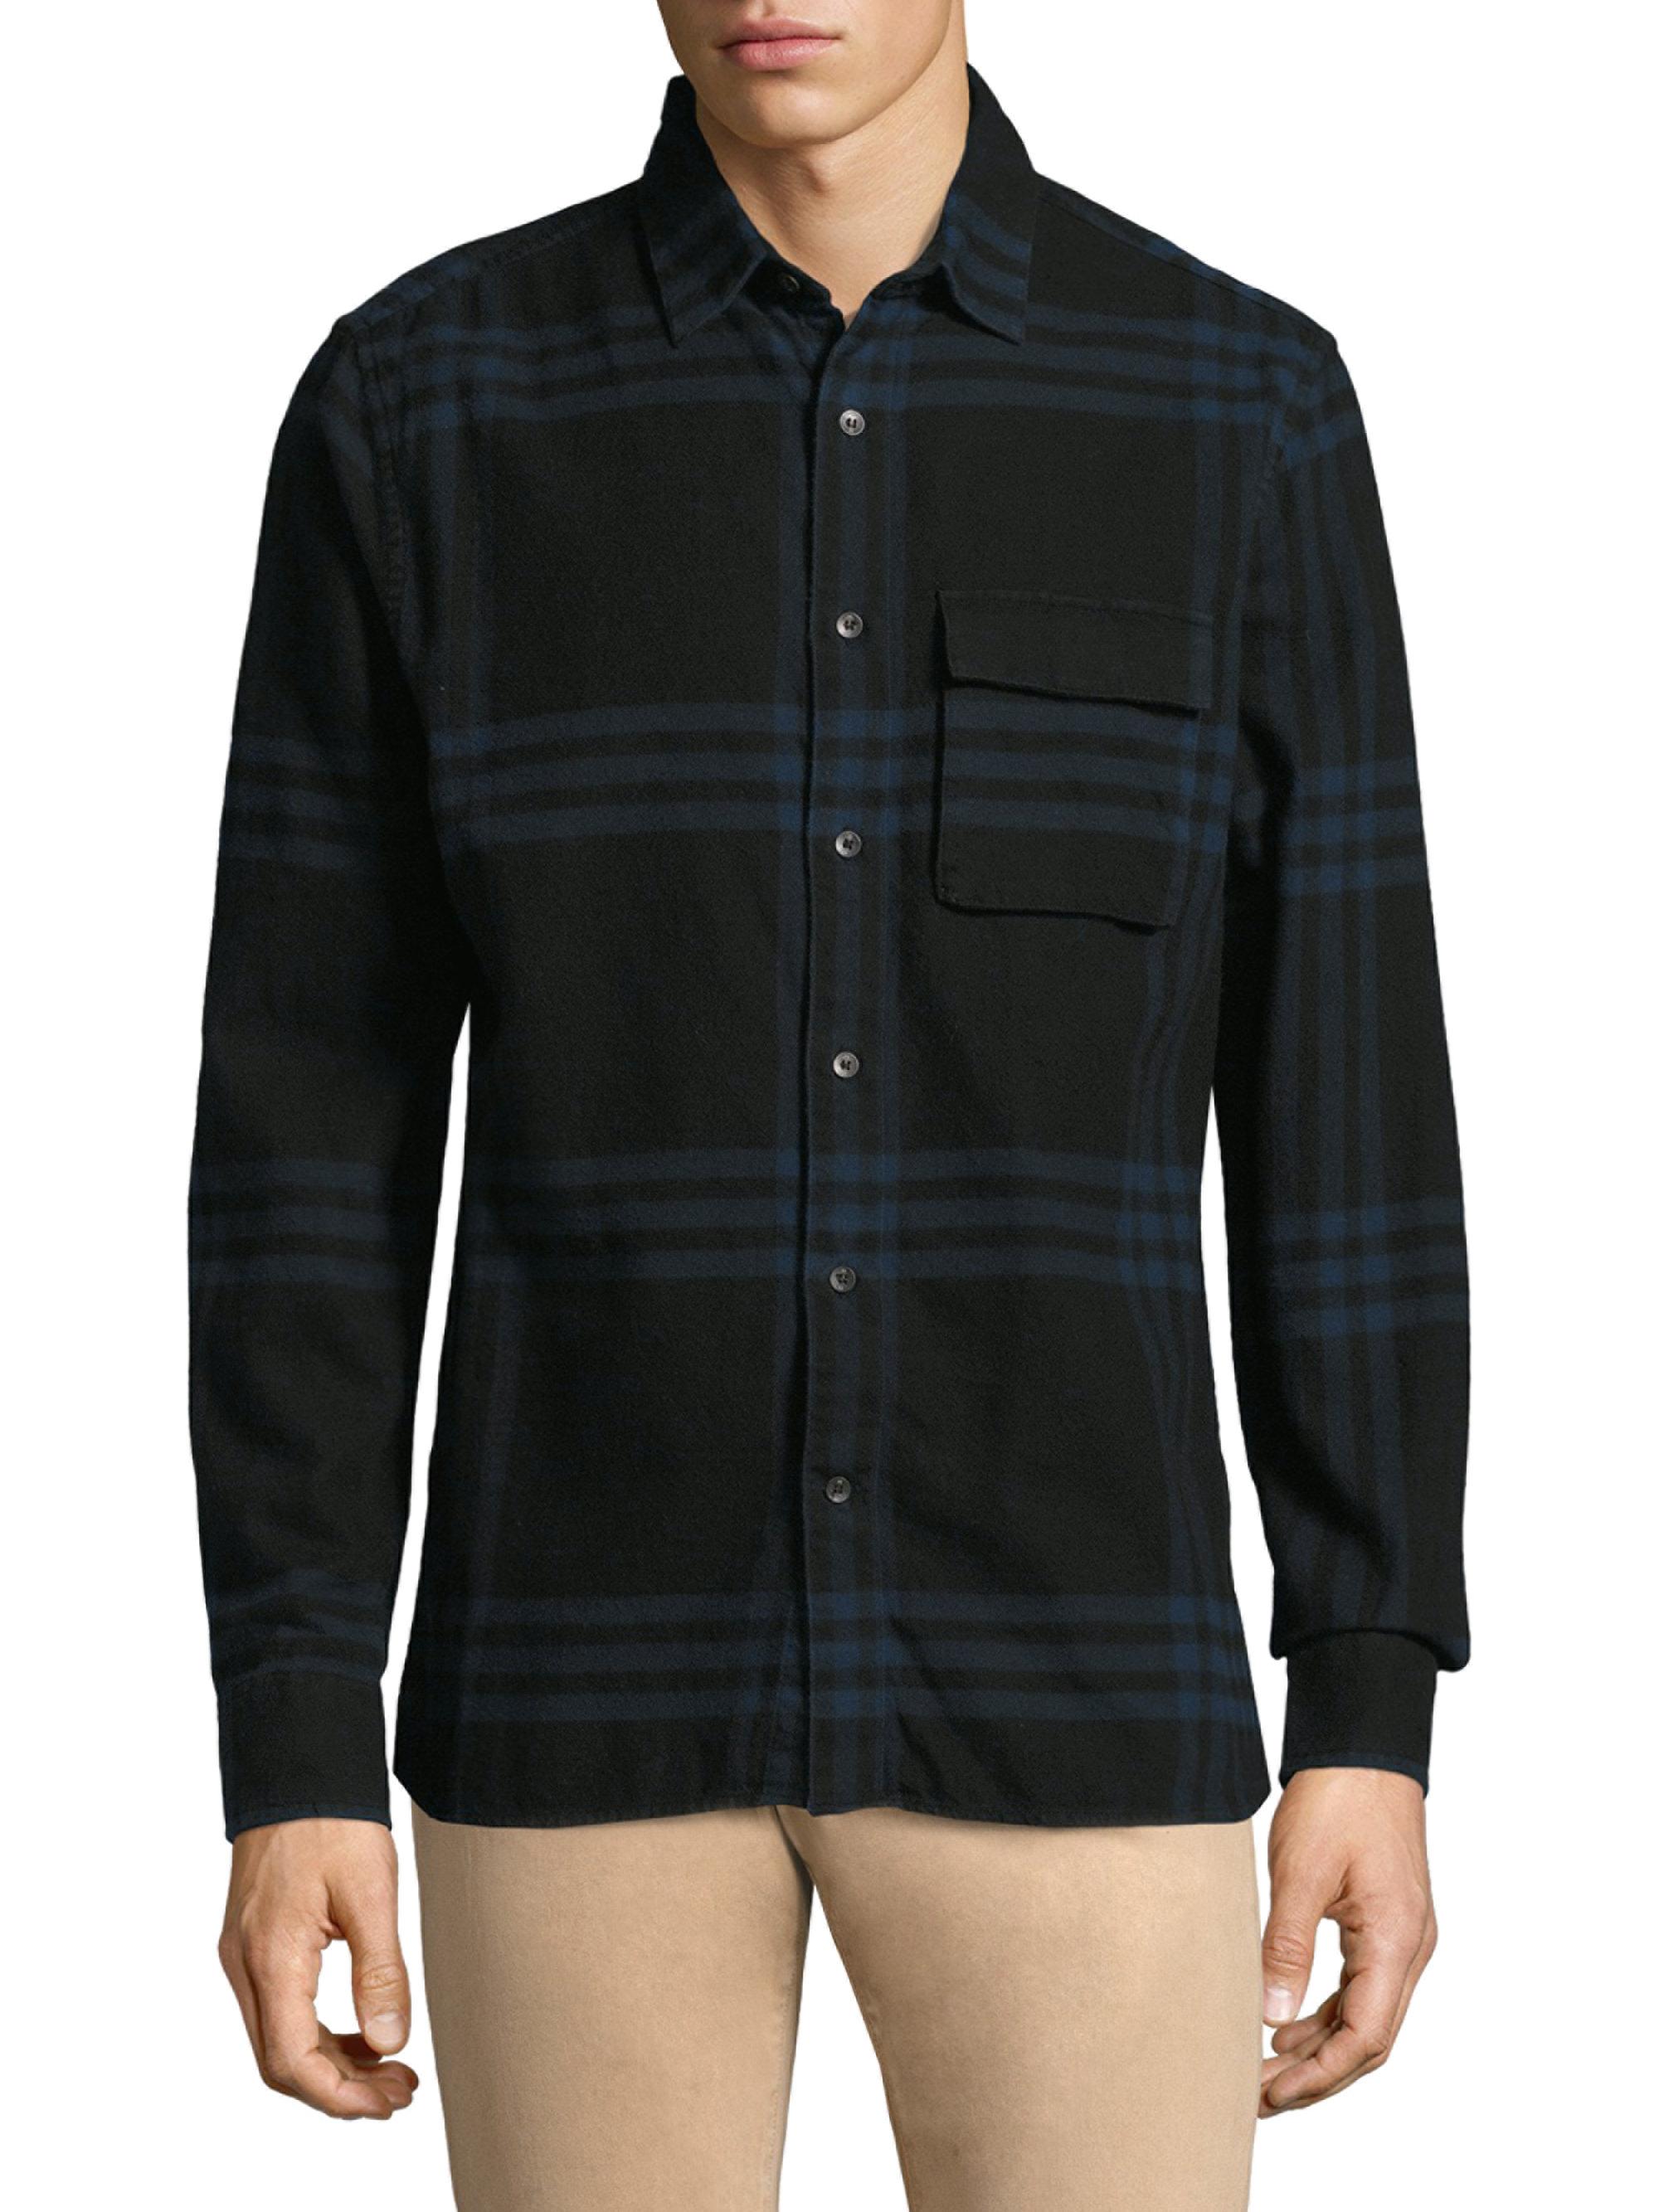 Lyst - Joe'S Bellowed Plaid Long-sleeve Cotton Shirt in Black for Men